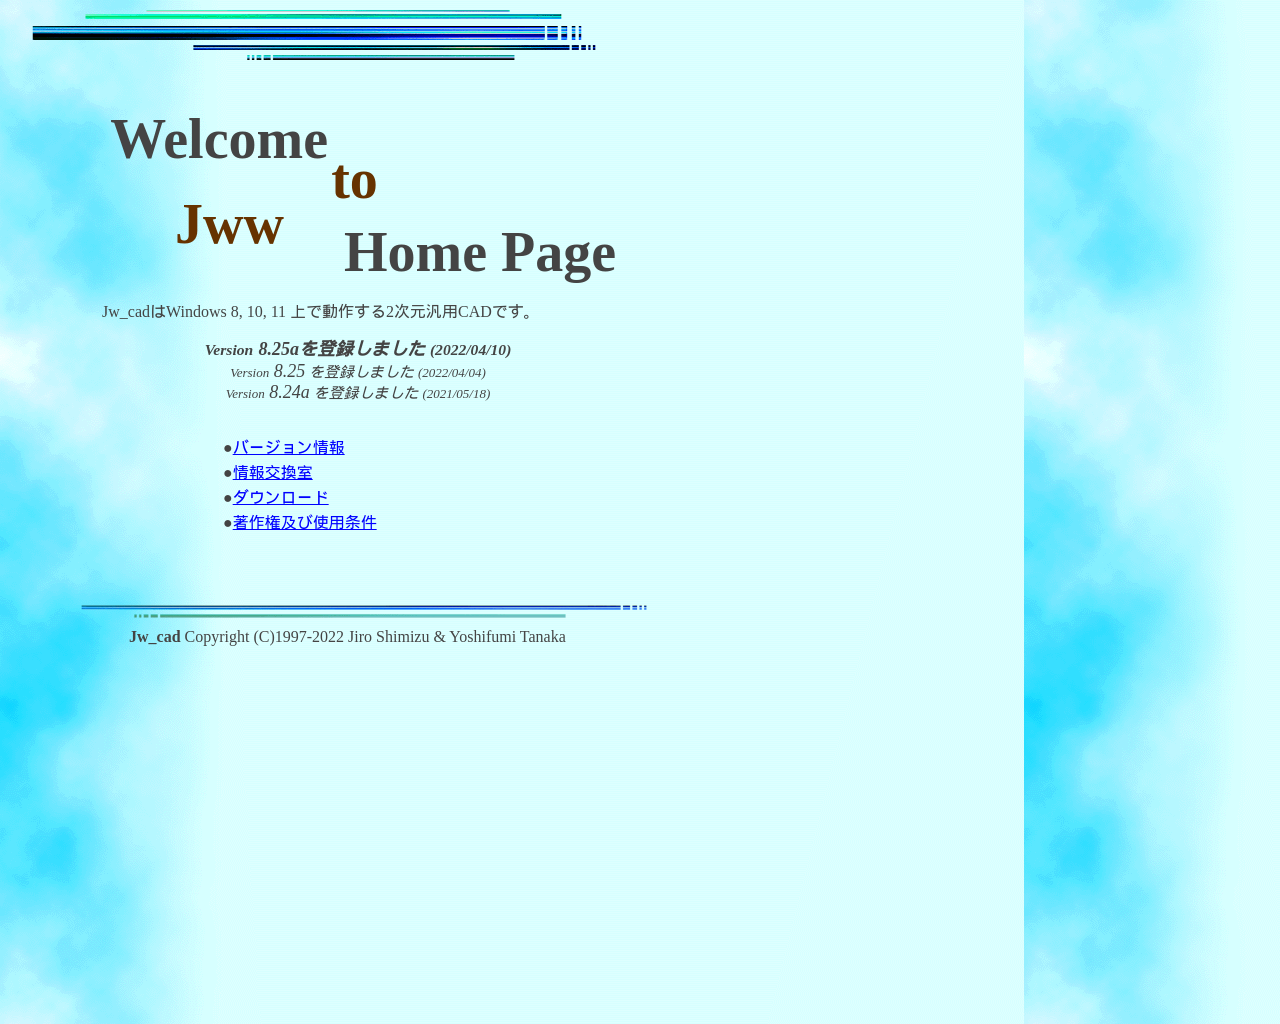 jwcad.net